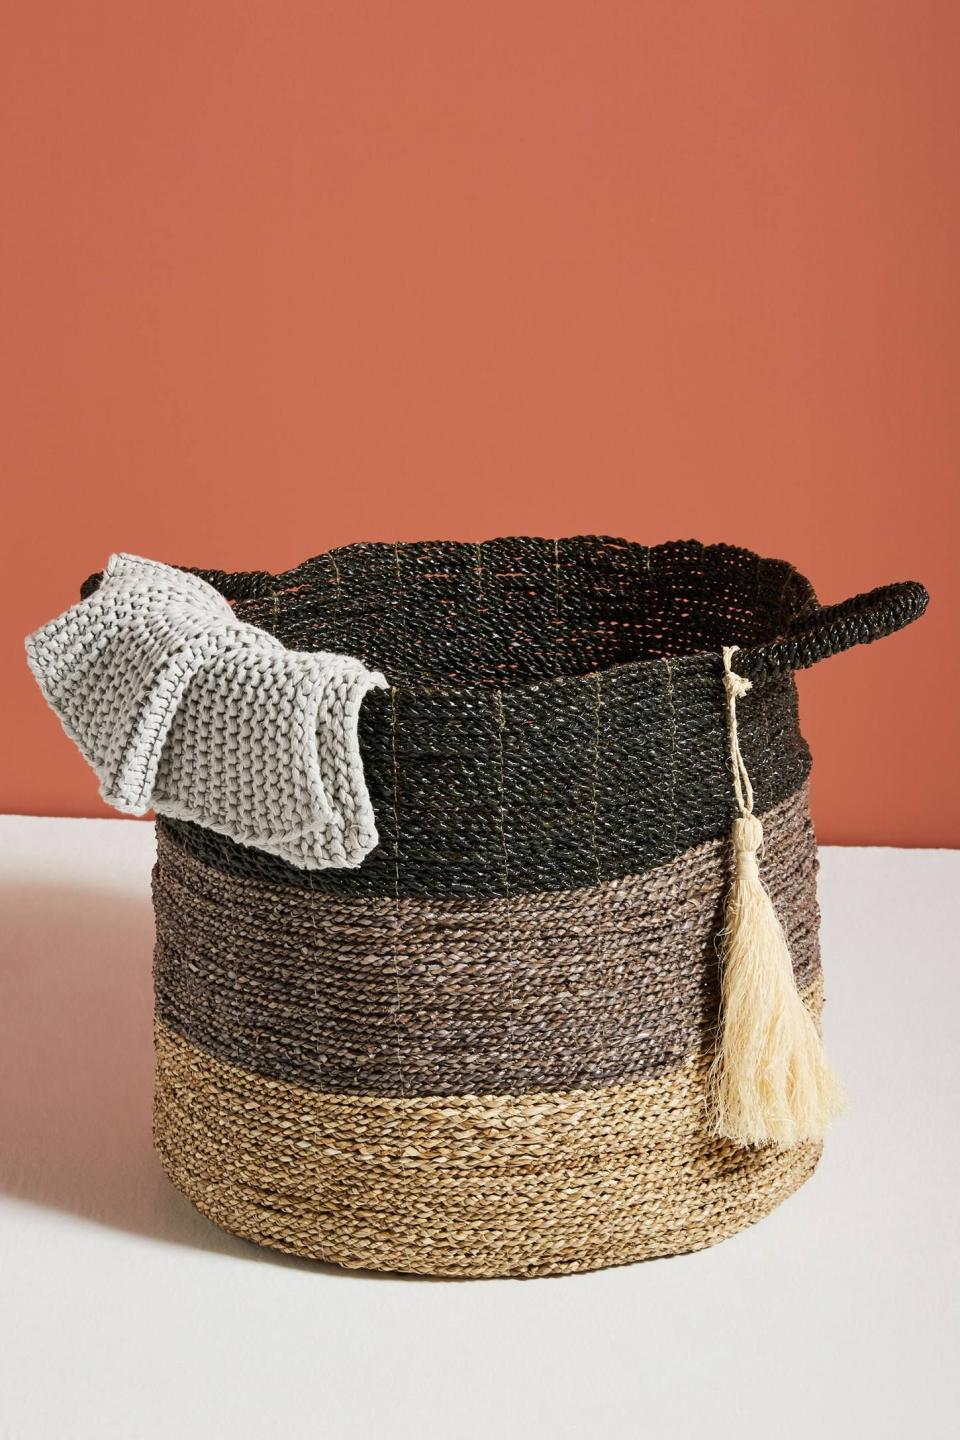 3) Handmade Seagrass Basket